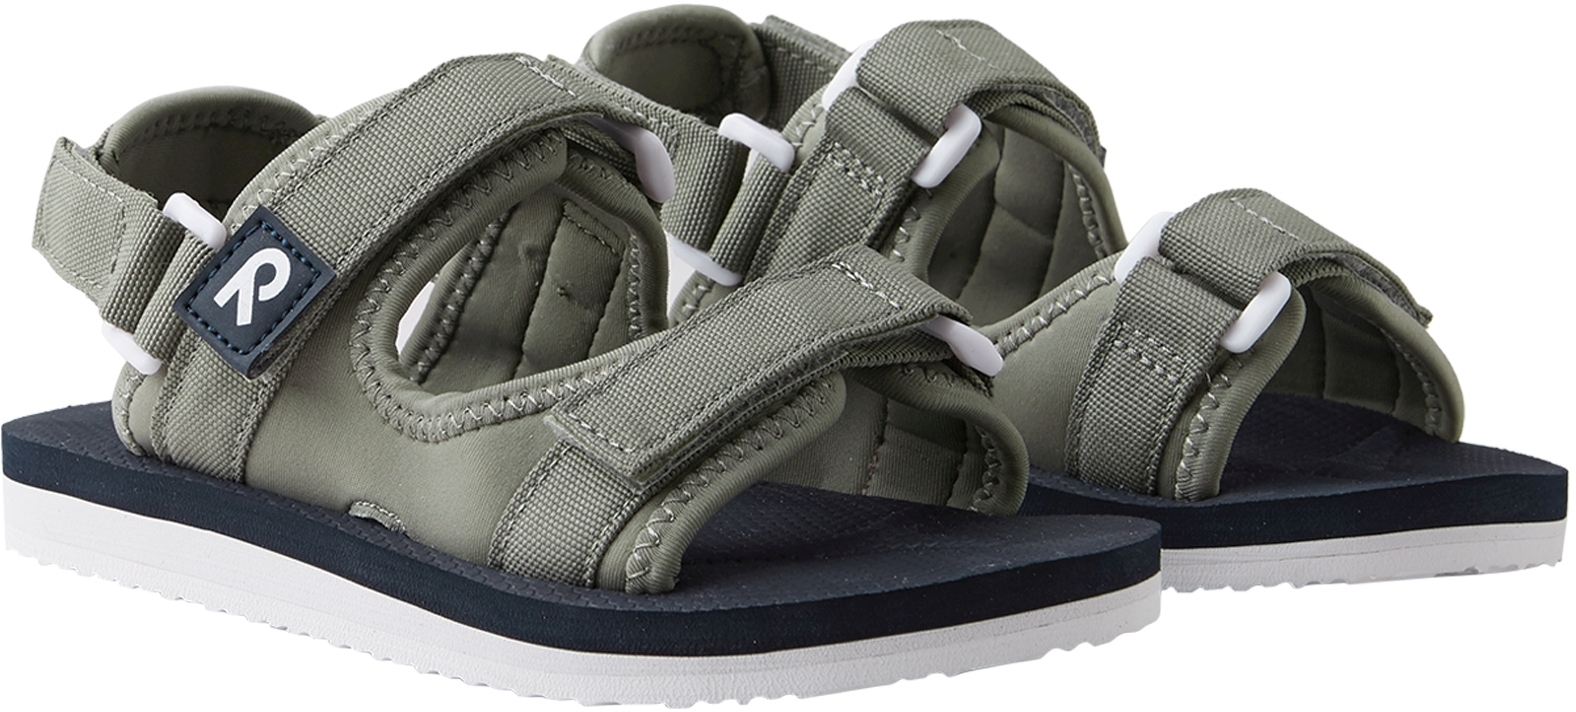 Reima Sandals Minsa 2.0 - Greyish green 34